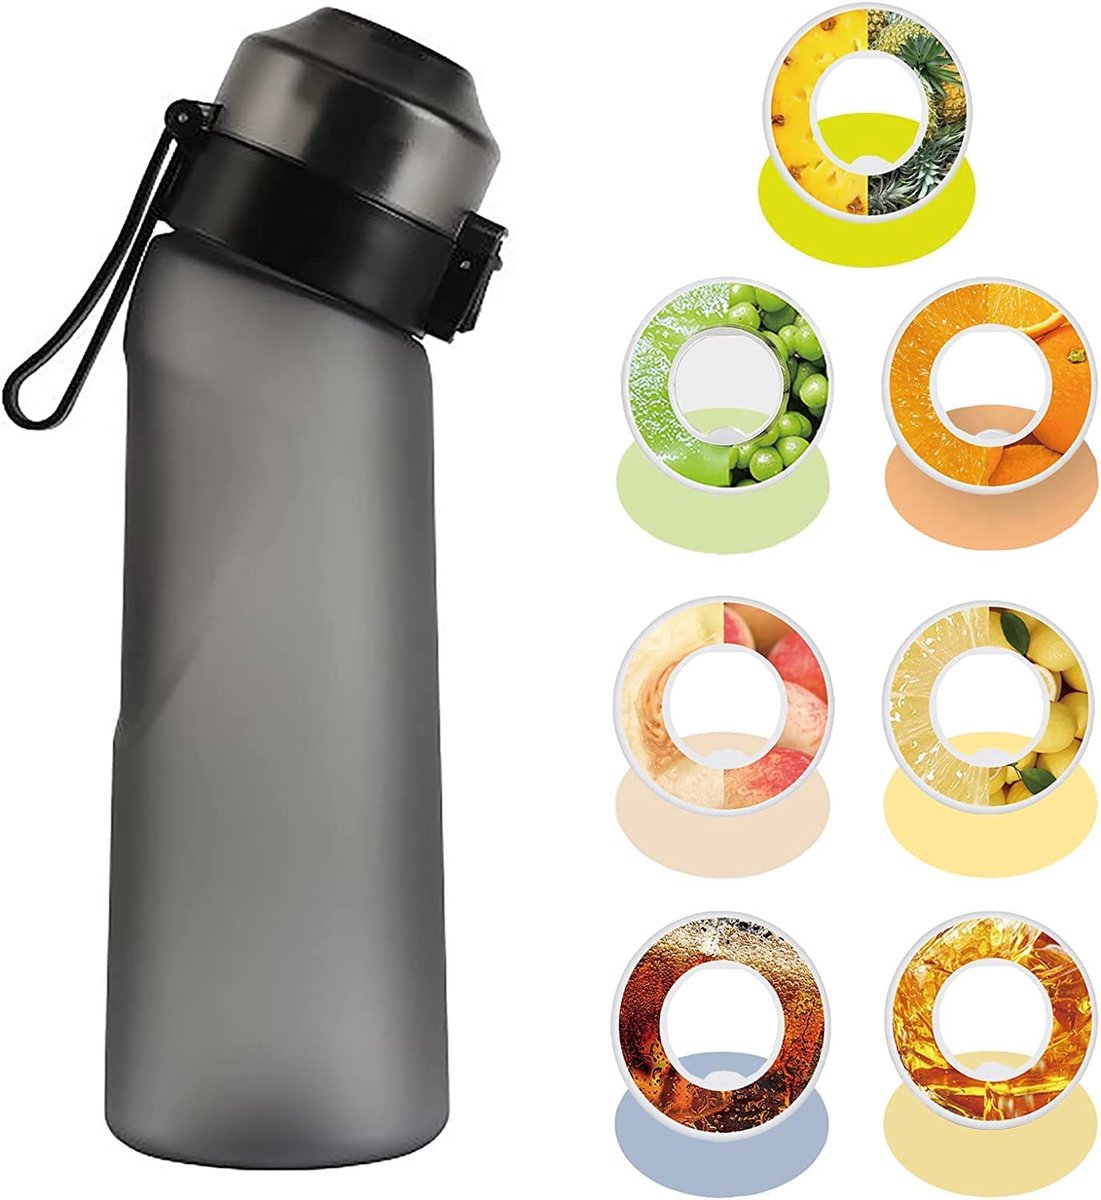 Geurwater Drinkfles - Water Bottle Up - Geur Air Waterfles - Inclusief 7 Pods - Mat Zwart - 650 ml - Tritan - BPA-vrij - Starterskit - Ananas - Citroen - Cola - Groene Druiven - Perzik - Red Bull - Sinaasappel - Bottle Up